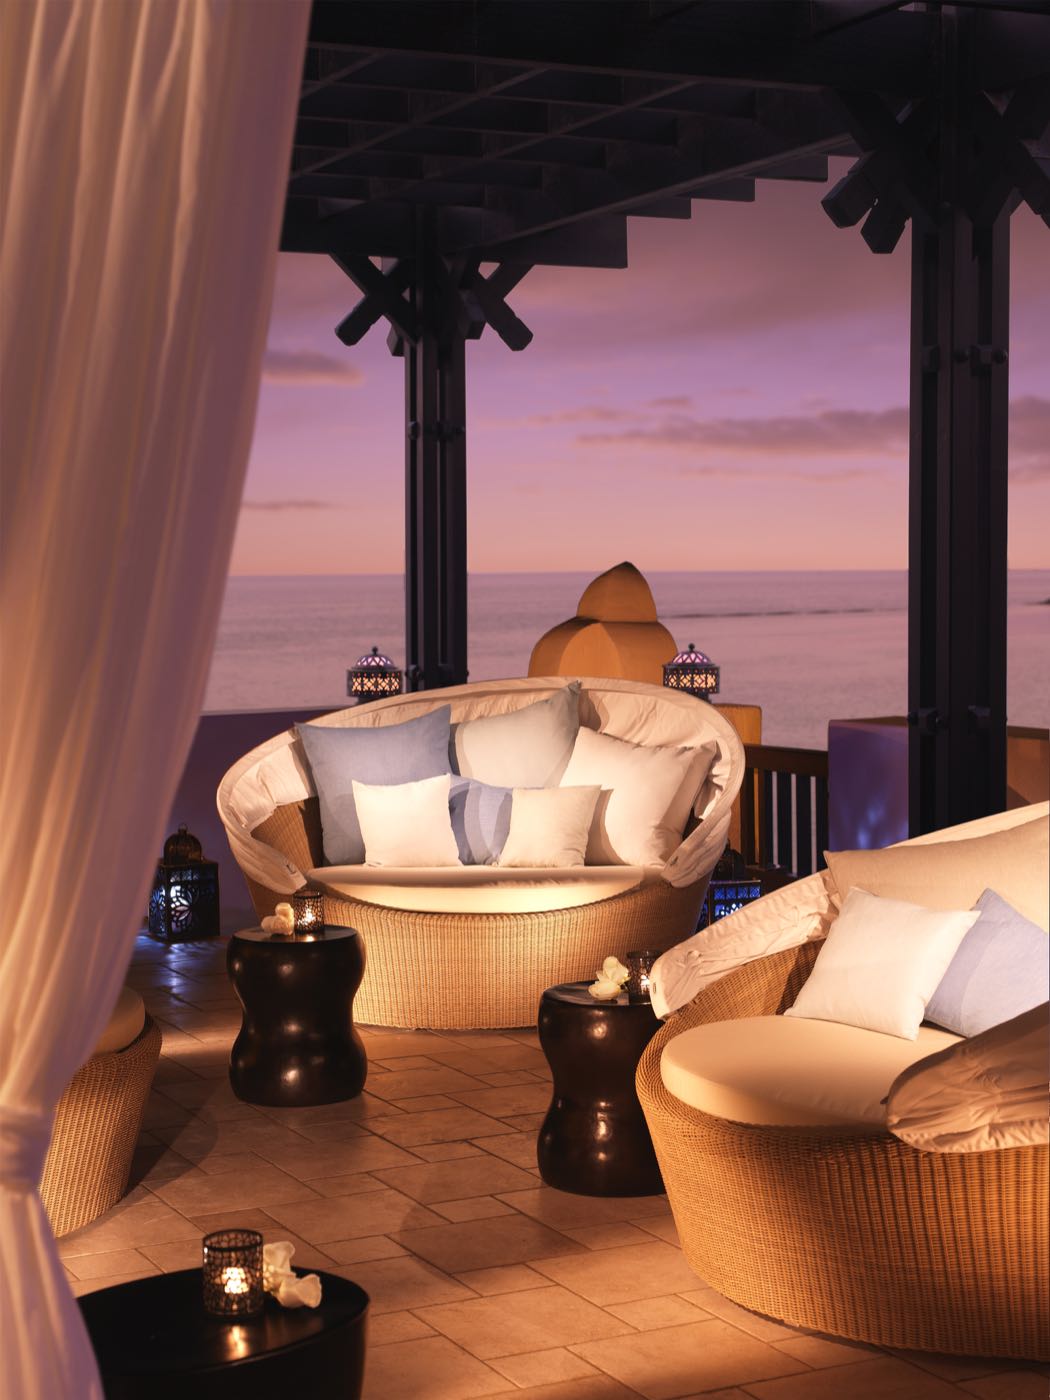 Ritz Carlton Sharq Village & Spa Review - An Oasis In Doha